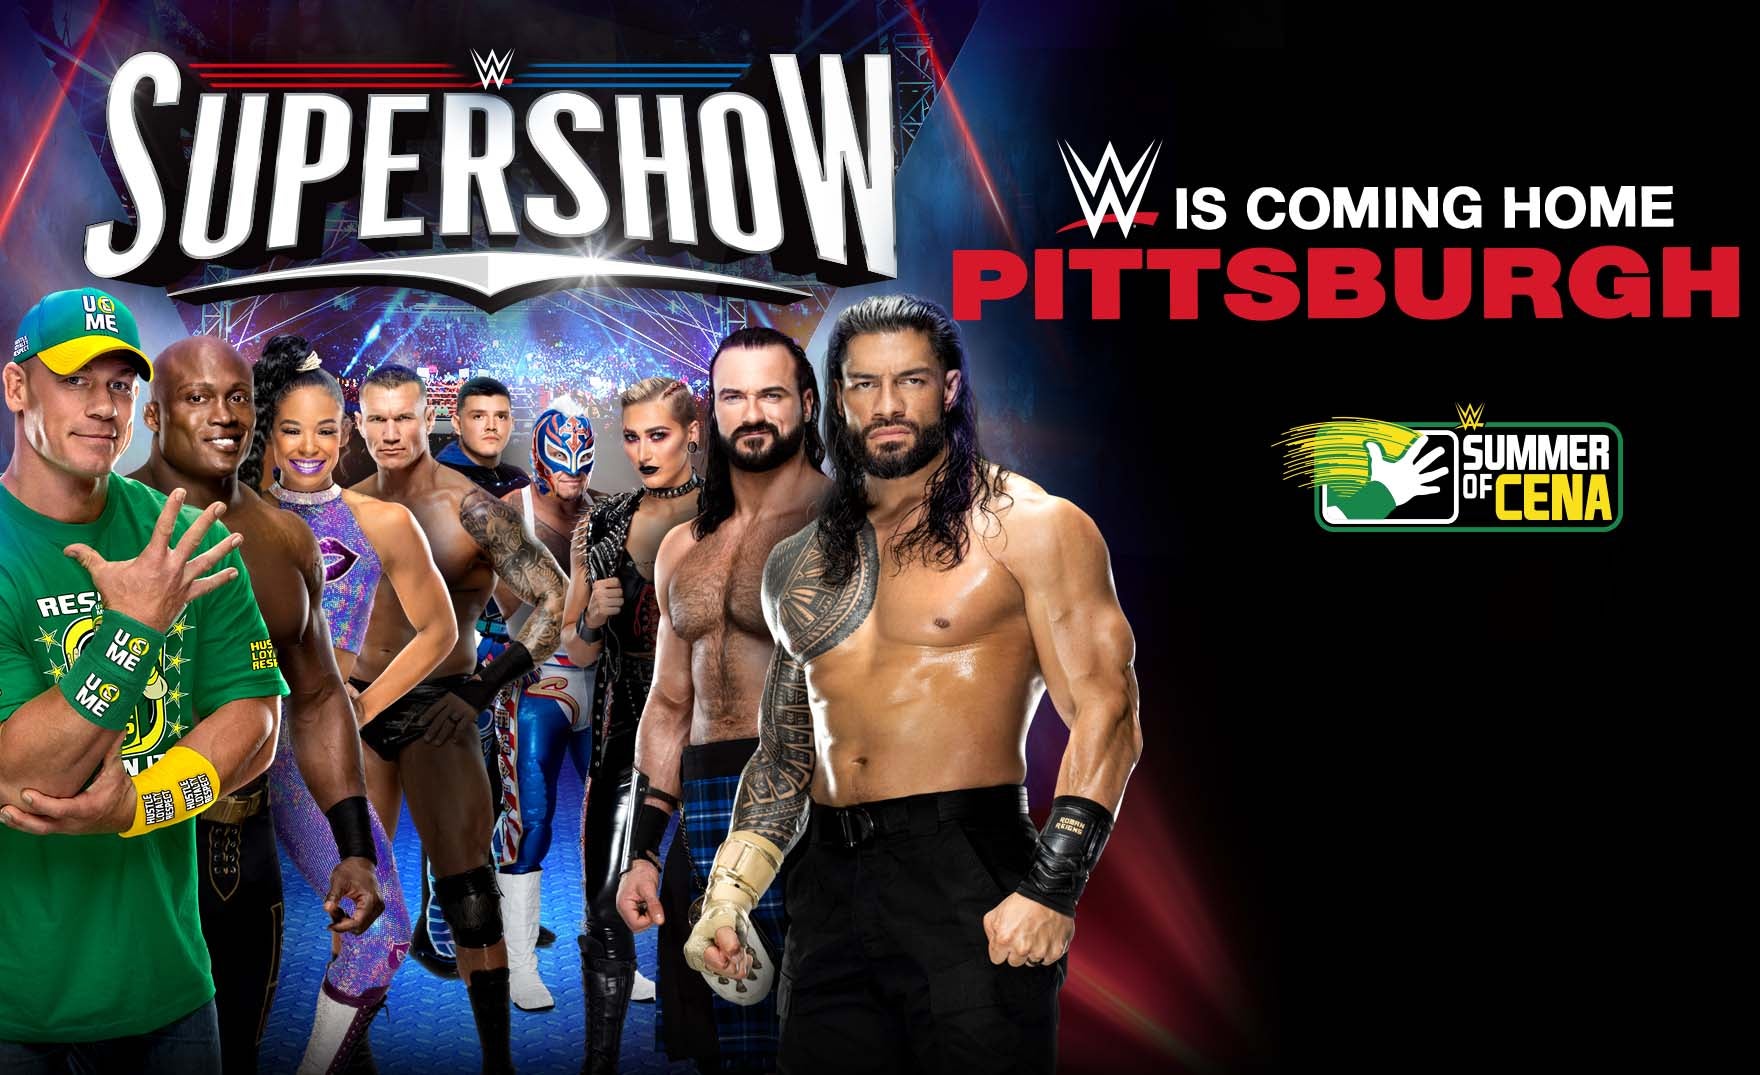 WWE Supershow